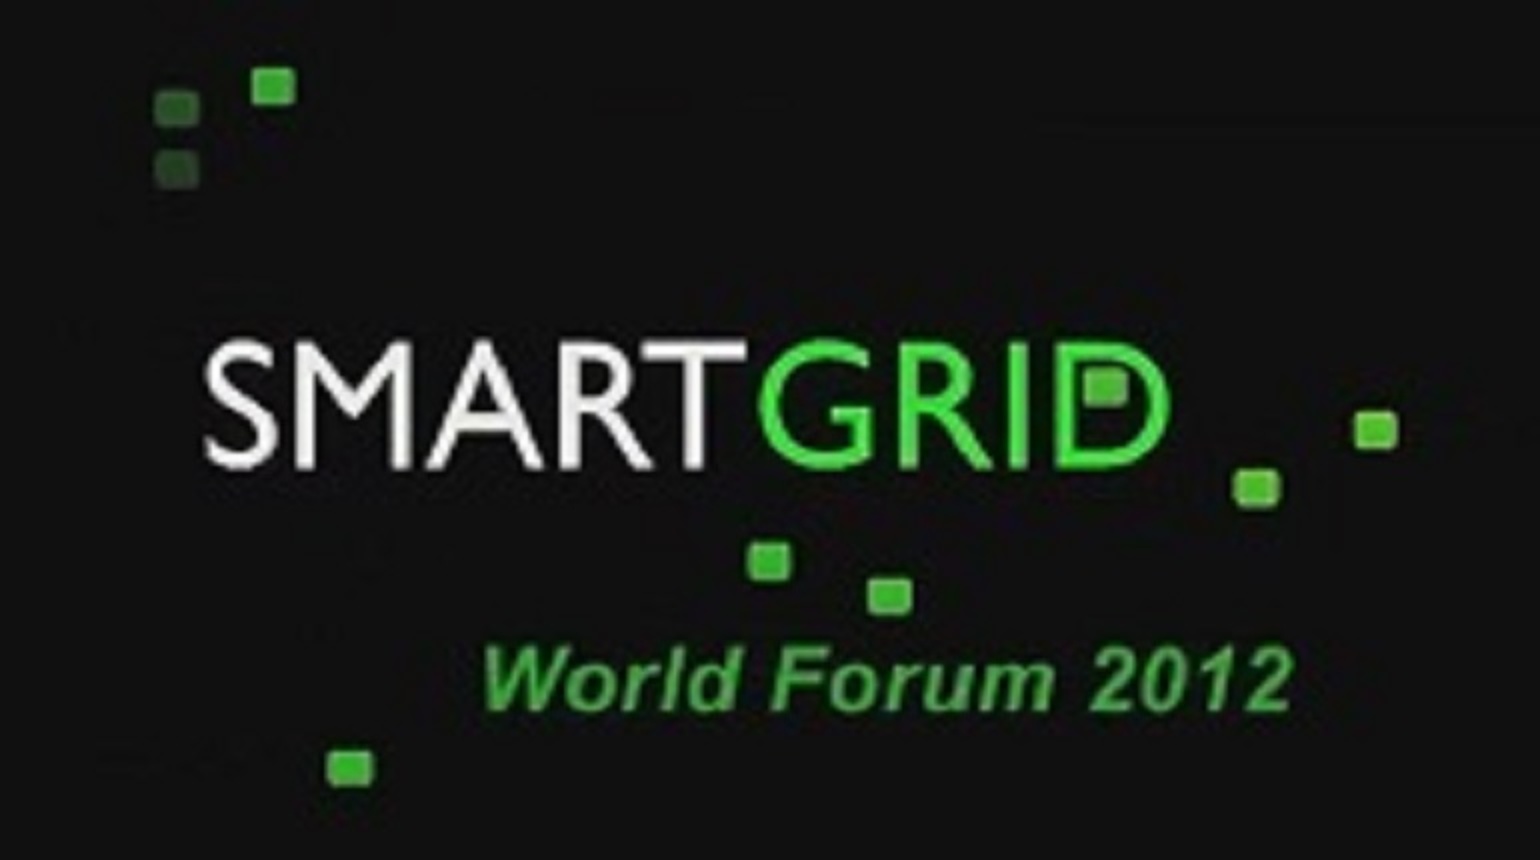 IEEE Smart Grid World Forum - Martin Vesper